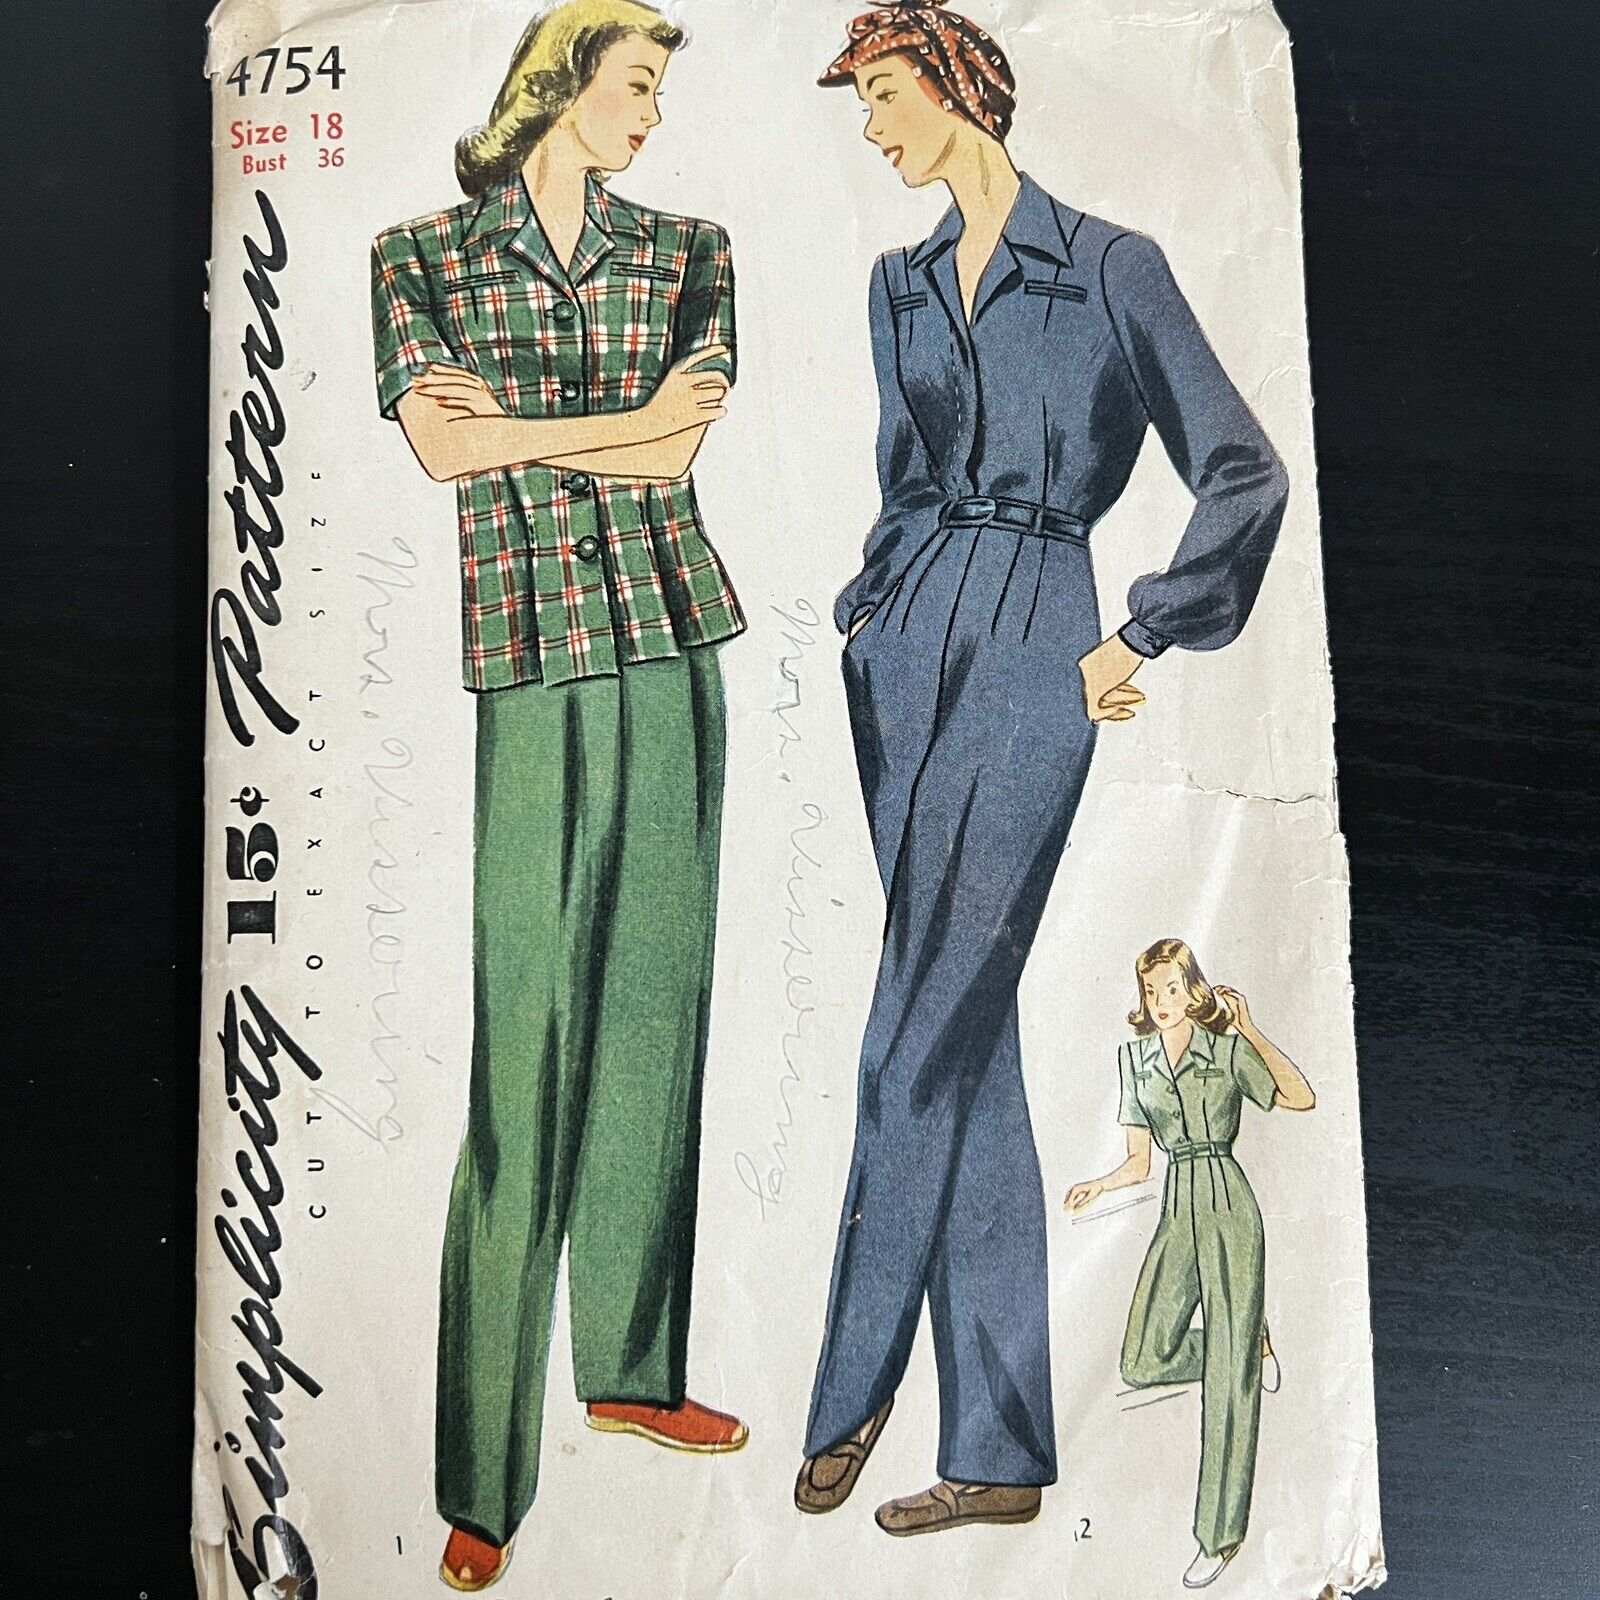 Vintage 1940s Simplicity 4754 Slim Fit Pants + Shirt Sewing Pattern 18 M/L USED